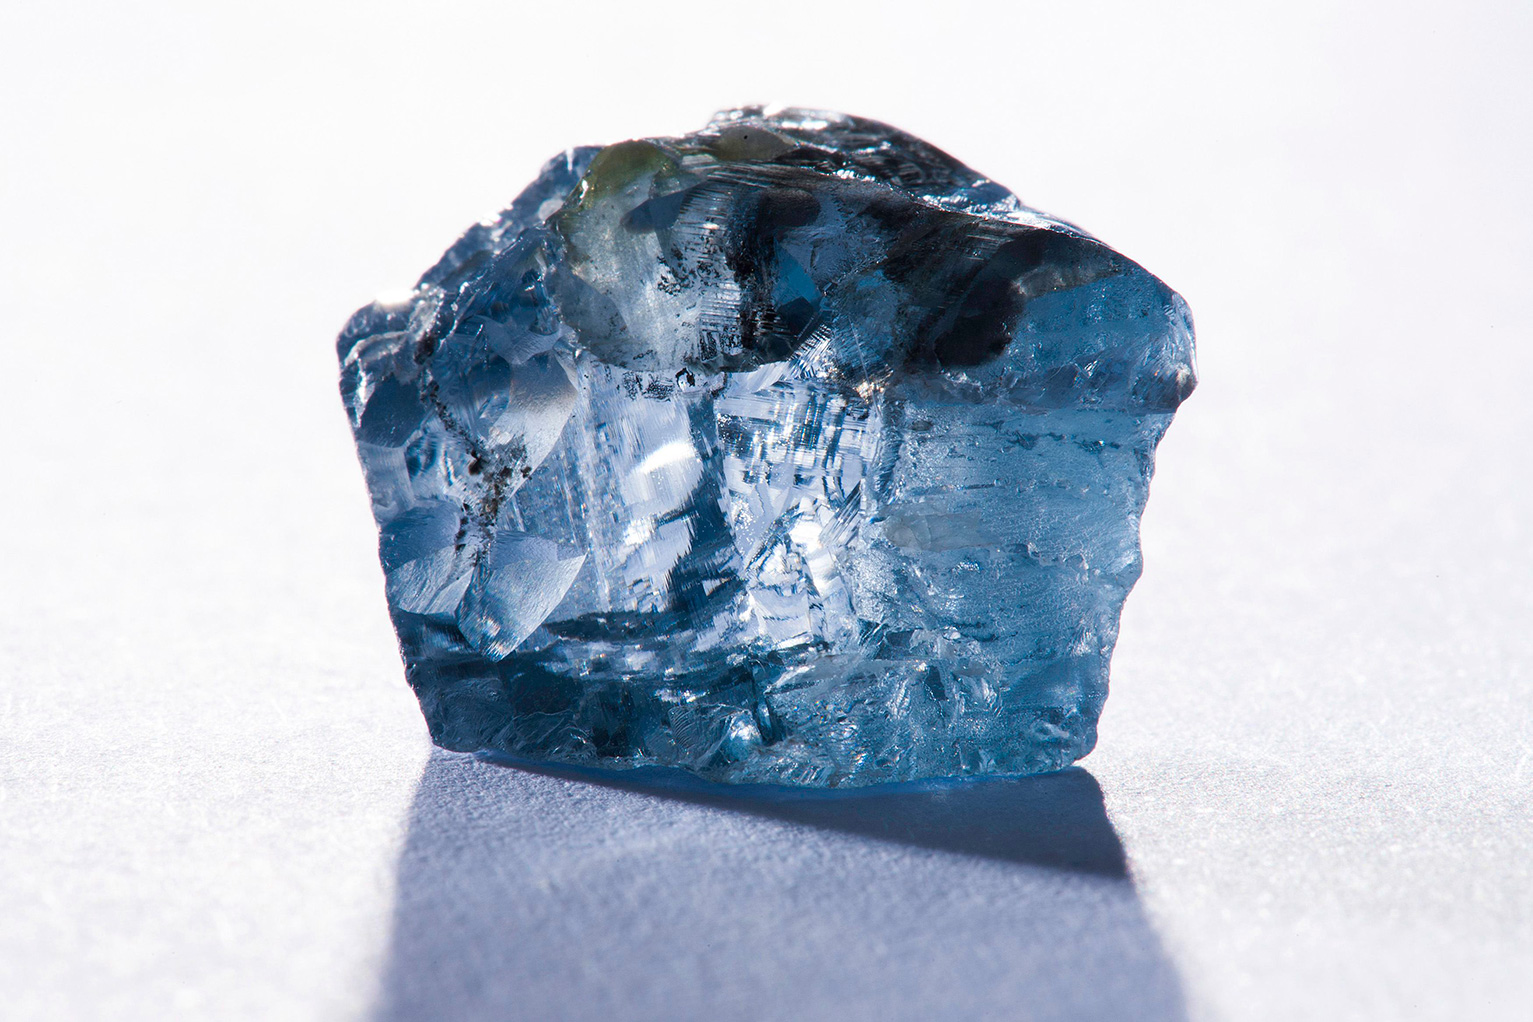 Hallan en Sudáfrica un ‘excepcional’ diamante azul de 29.6 quilates